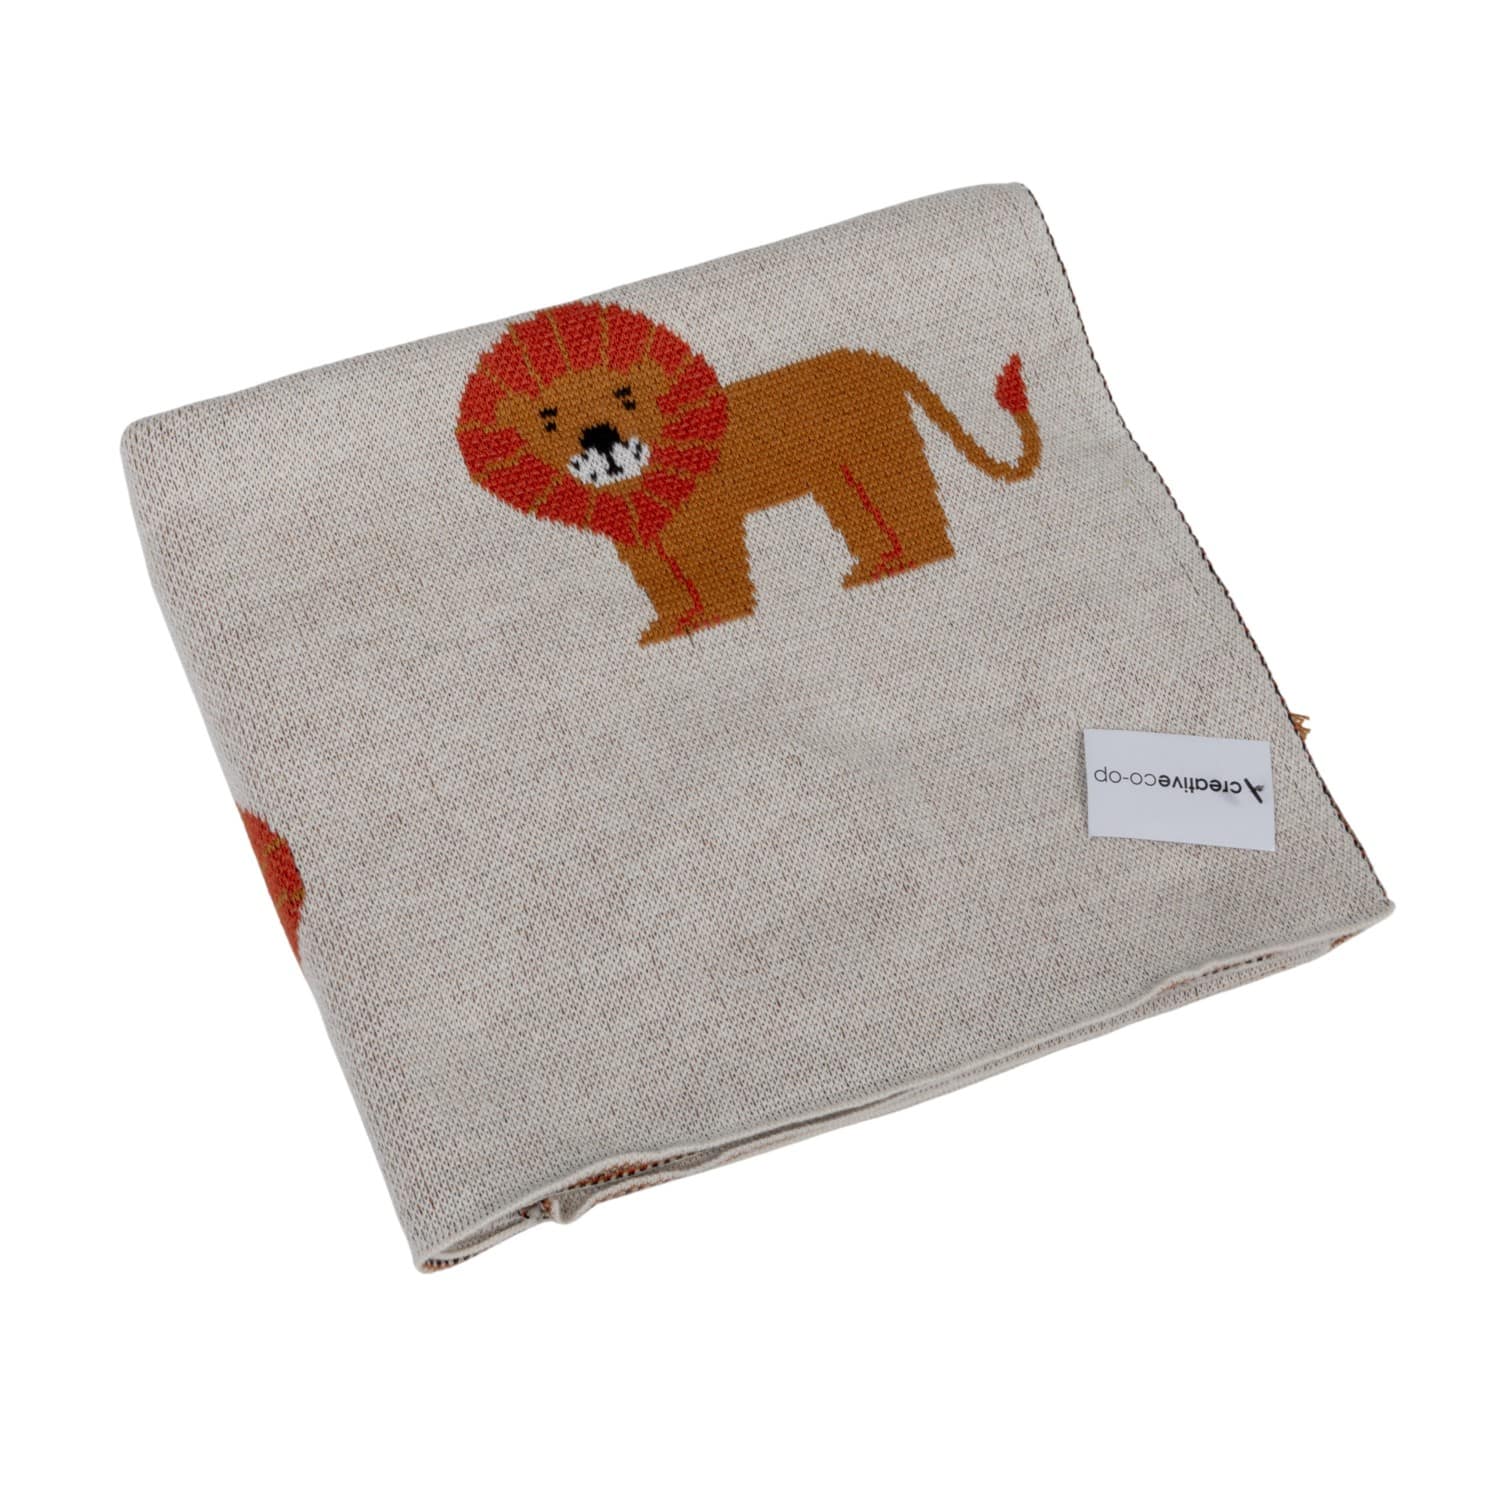 Lion Print Cotton Knit Baby Blanket